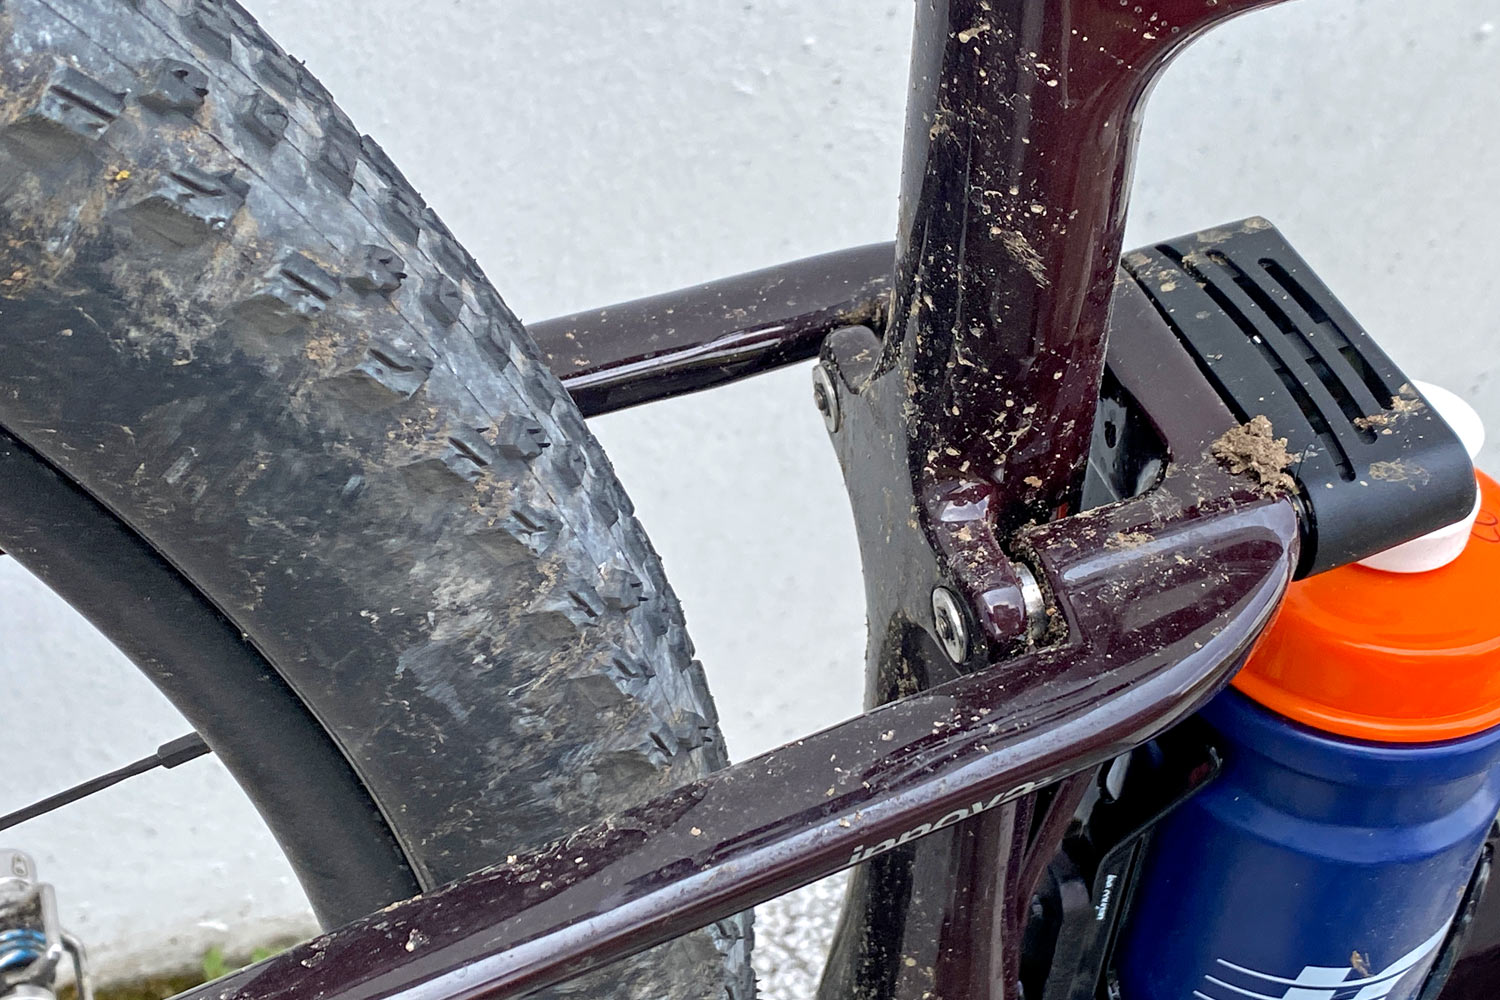 Lee Cougan Rampage Innova 30mm carbon XC MTB mountain bike softail, ISS detail